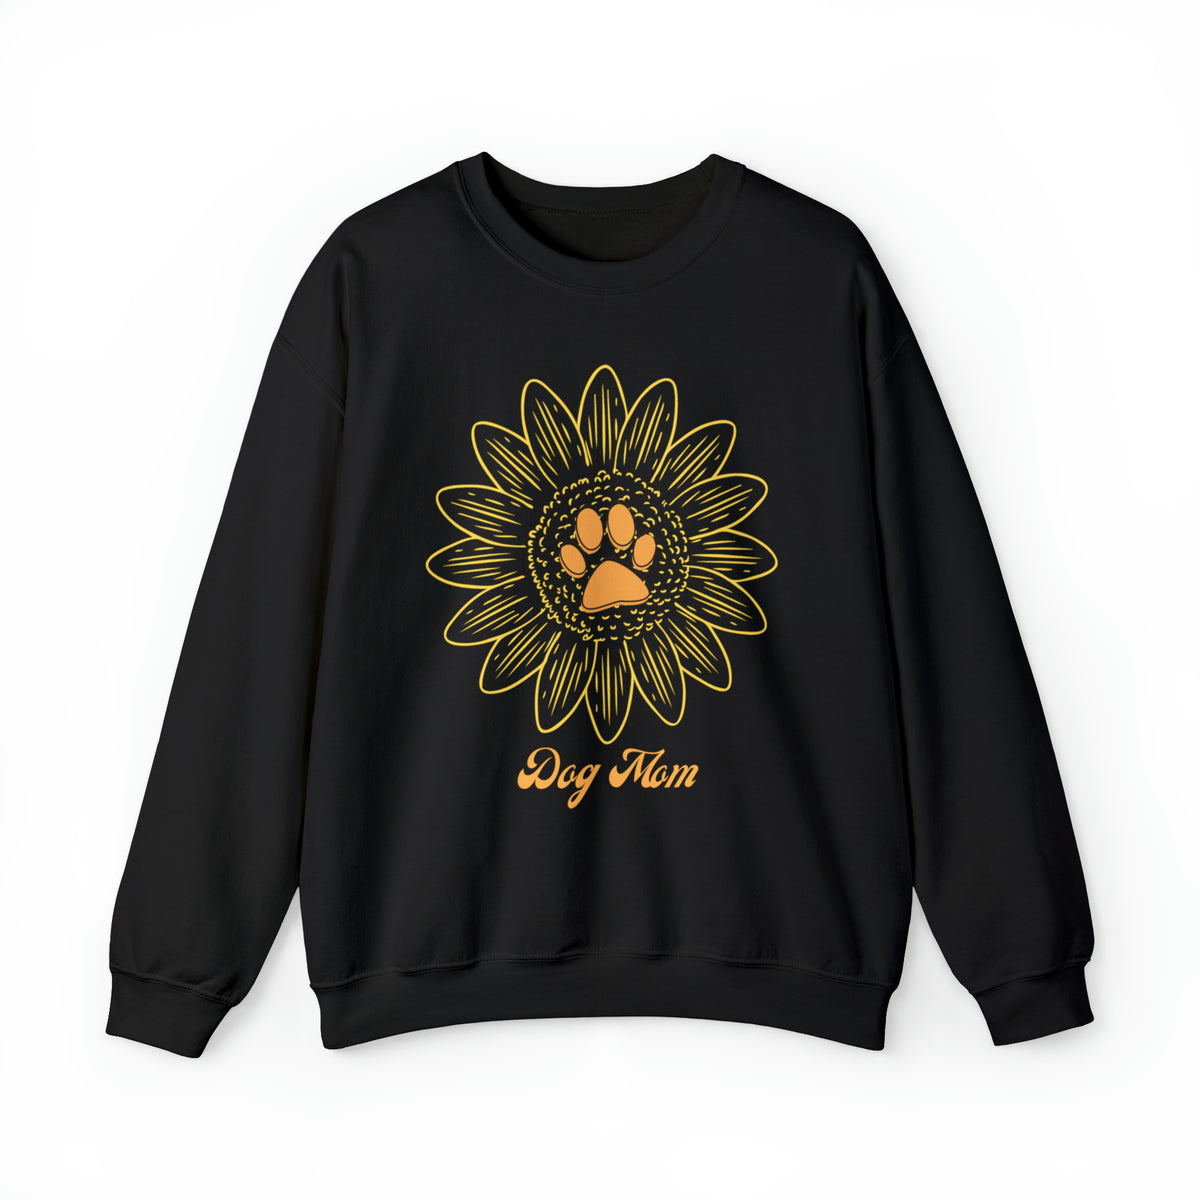 Dog Mom Sunflower Black Crewneck Sweatshirt